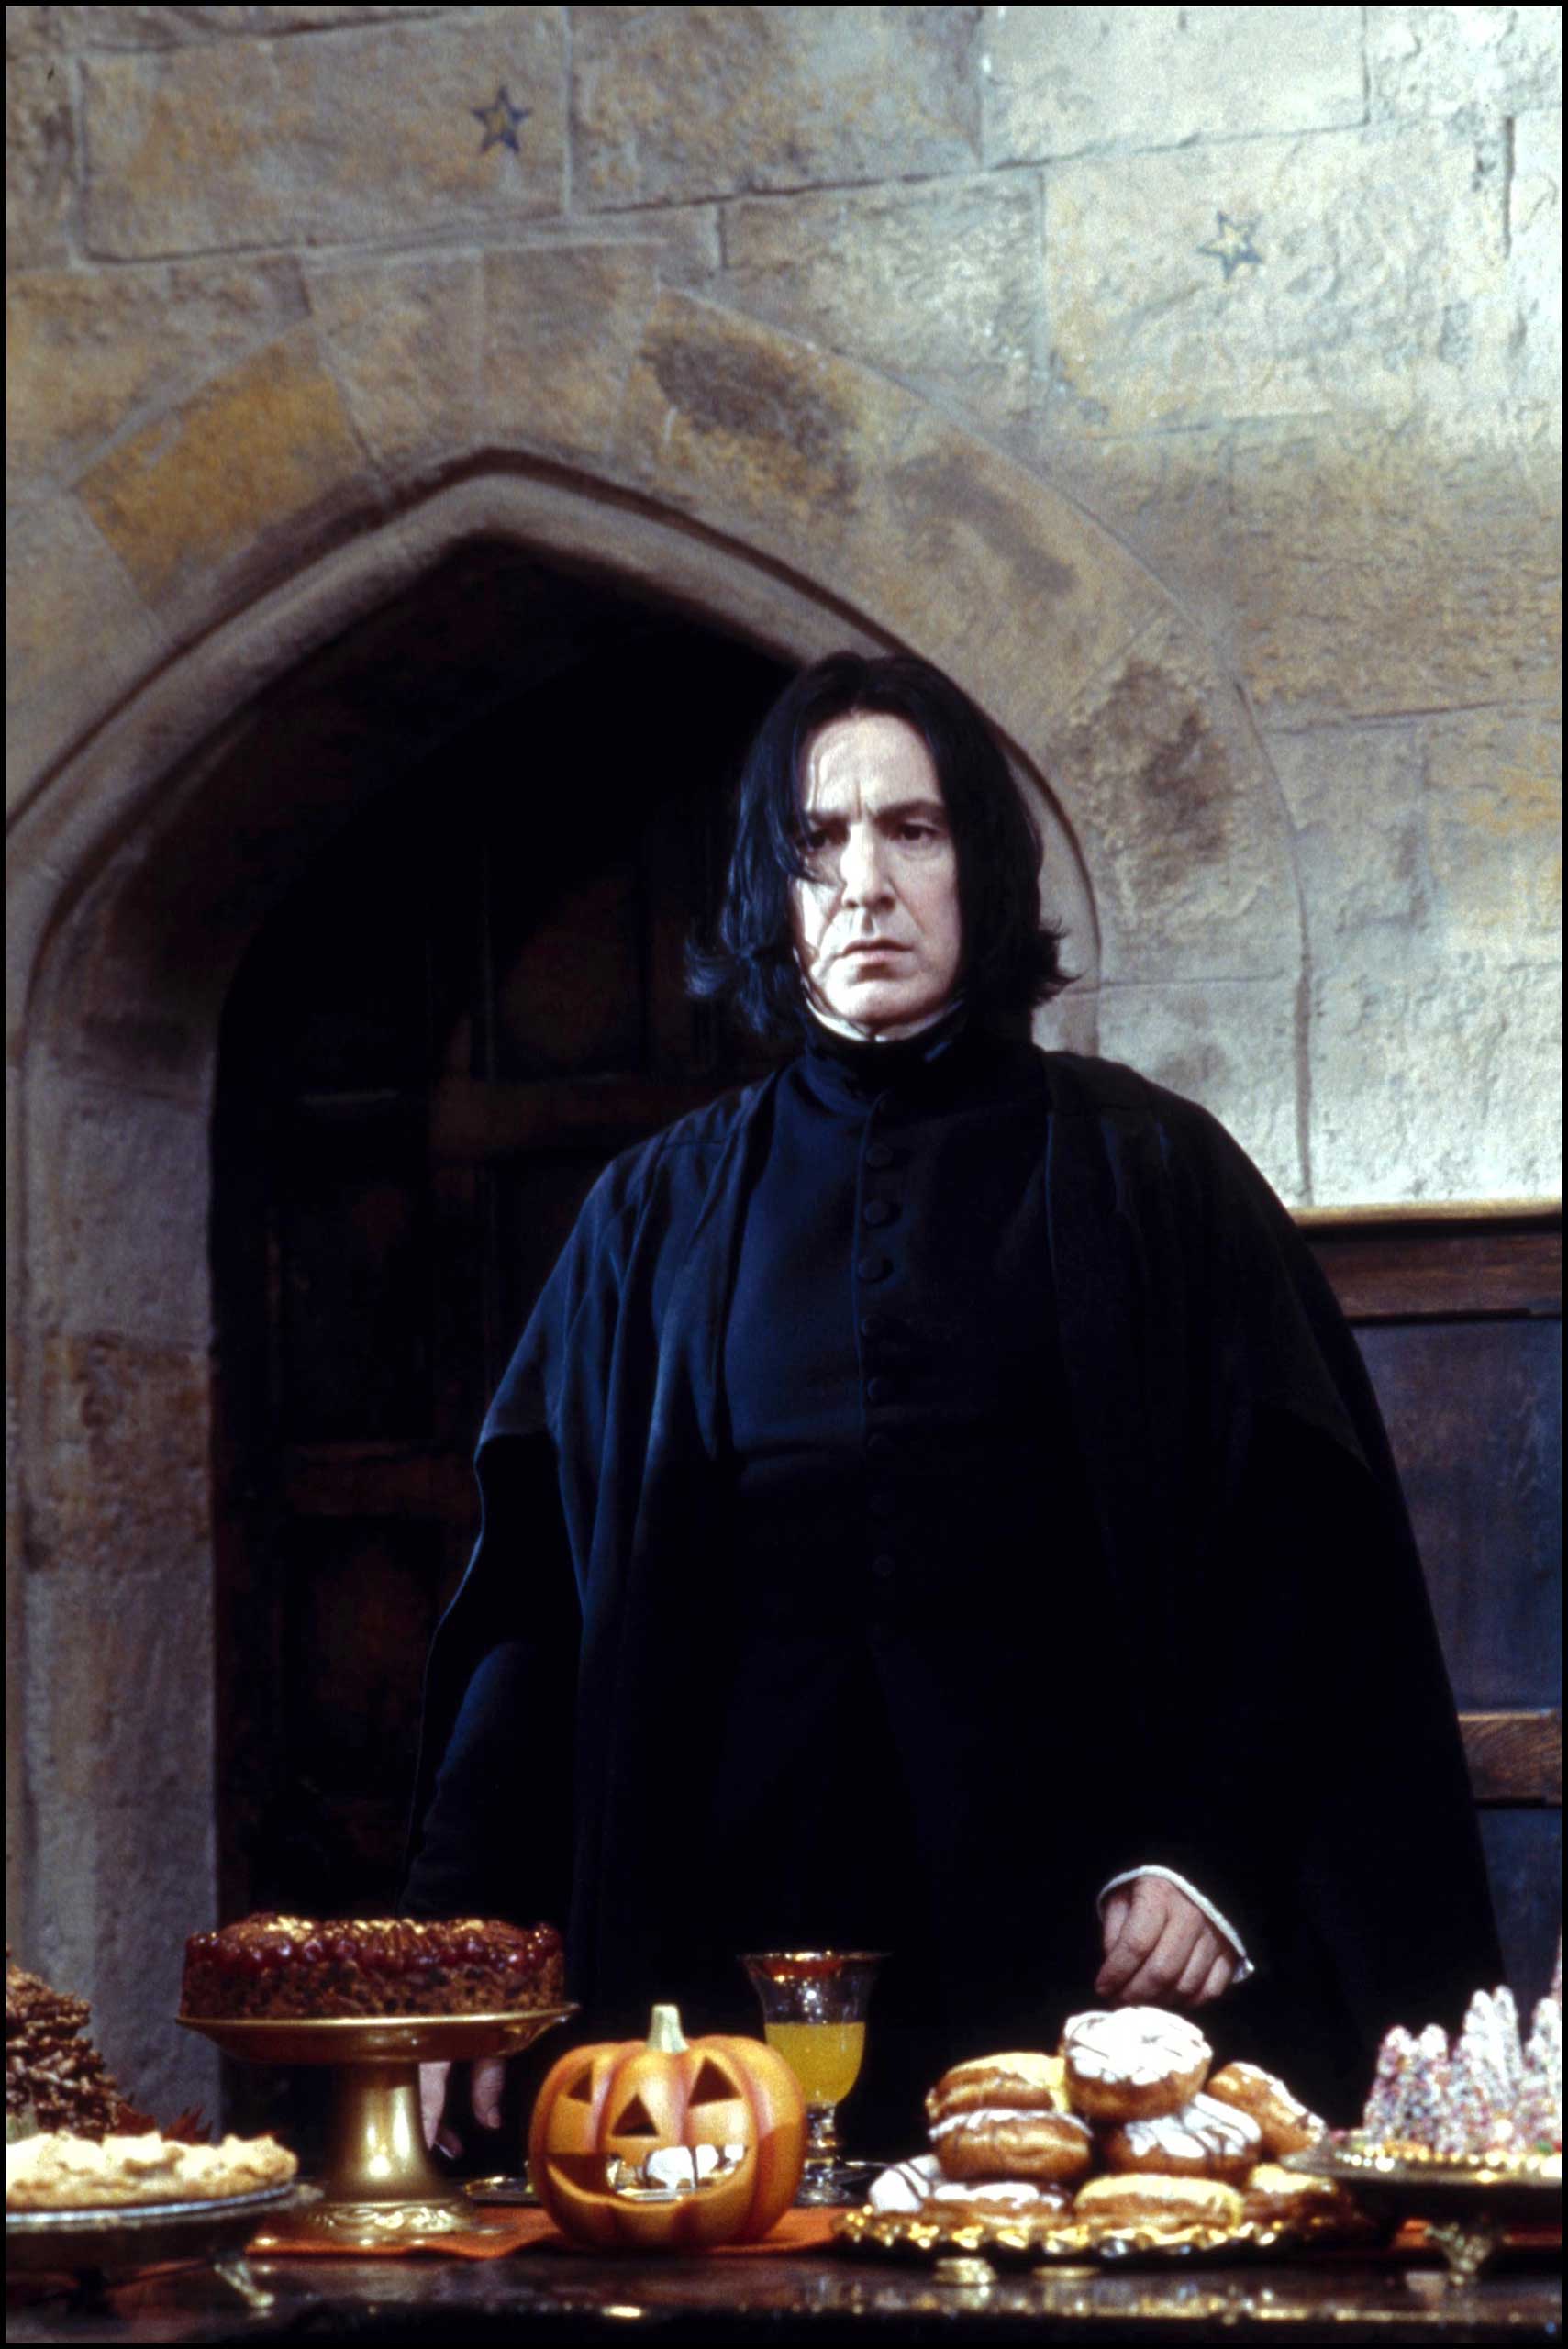 Professor Snape in Harry Potter (Alan Rickman)